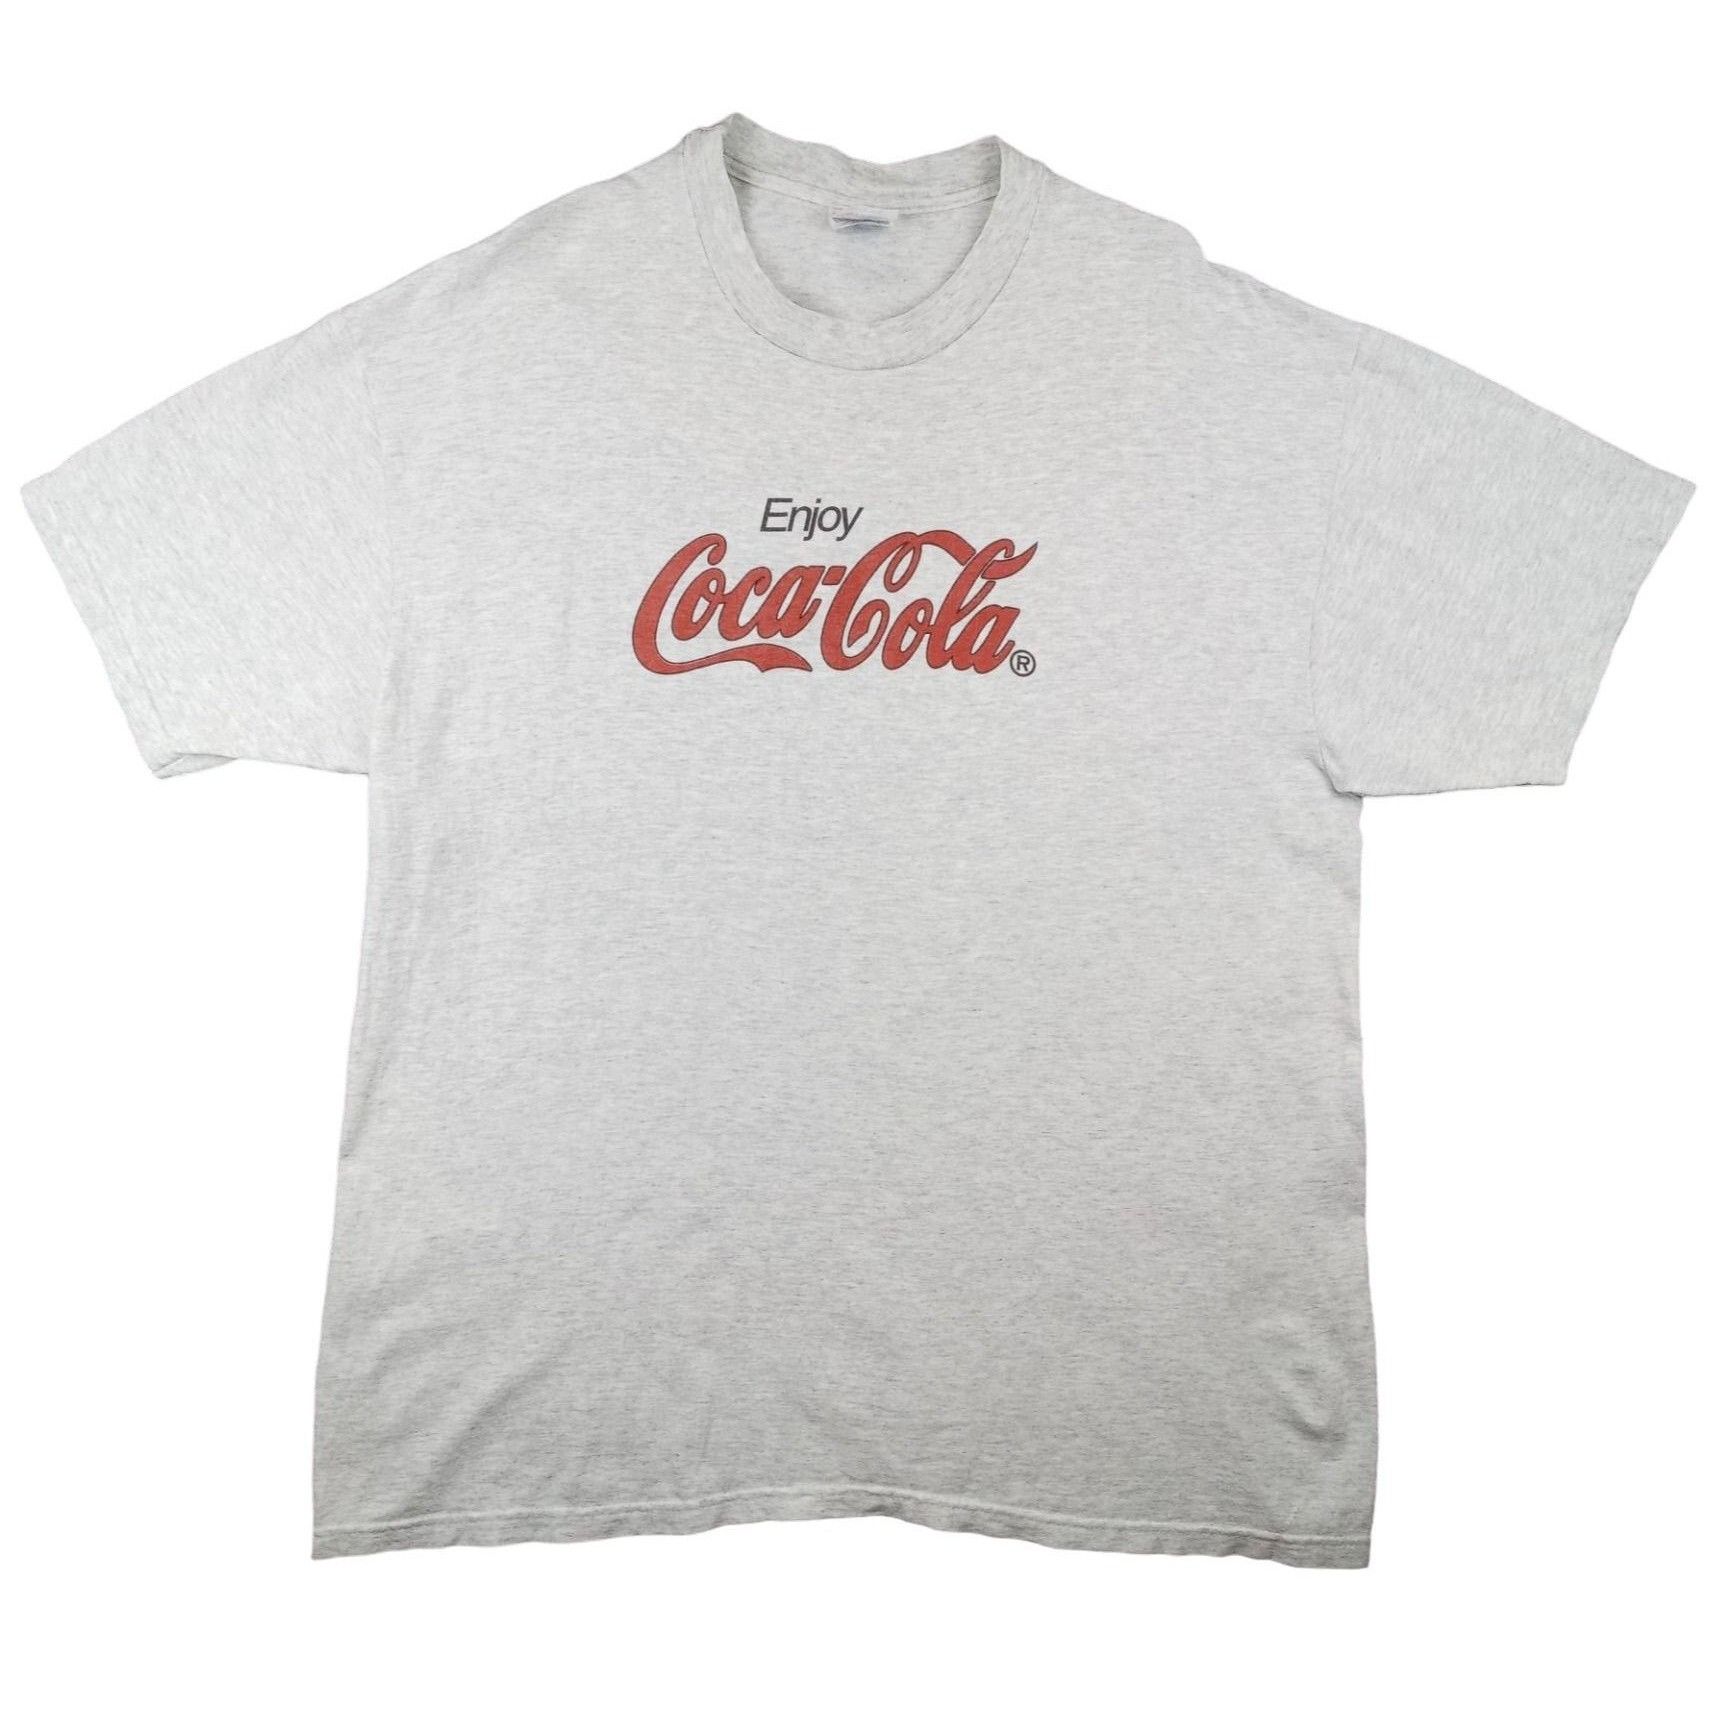 Vintage Vintage Coca Cola T-Shirt XL Enjoy Heather Grey Drink Snack Size US XL / EU 56 / 4 - 1 Preview